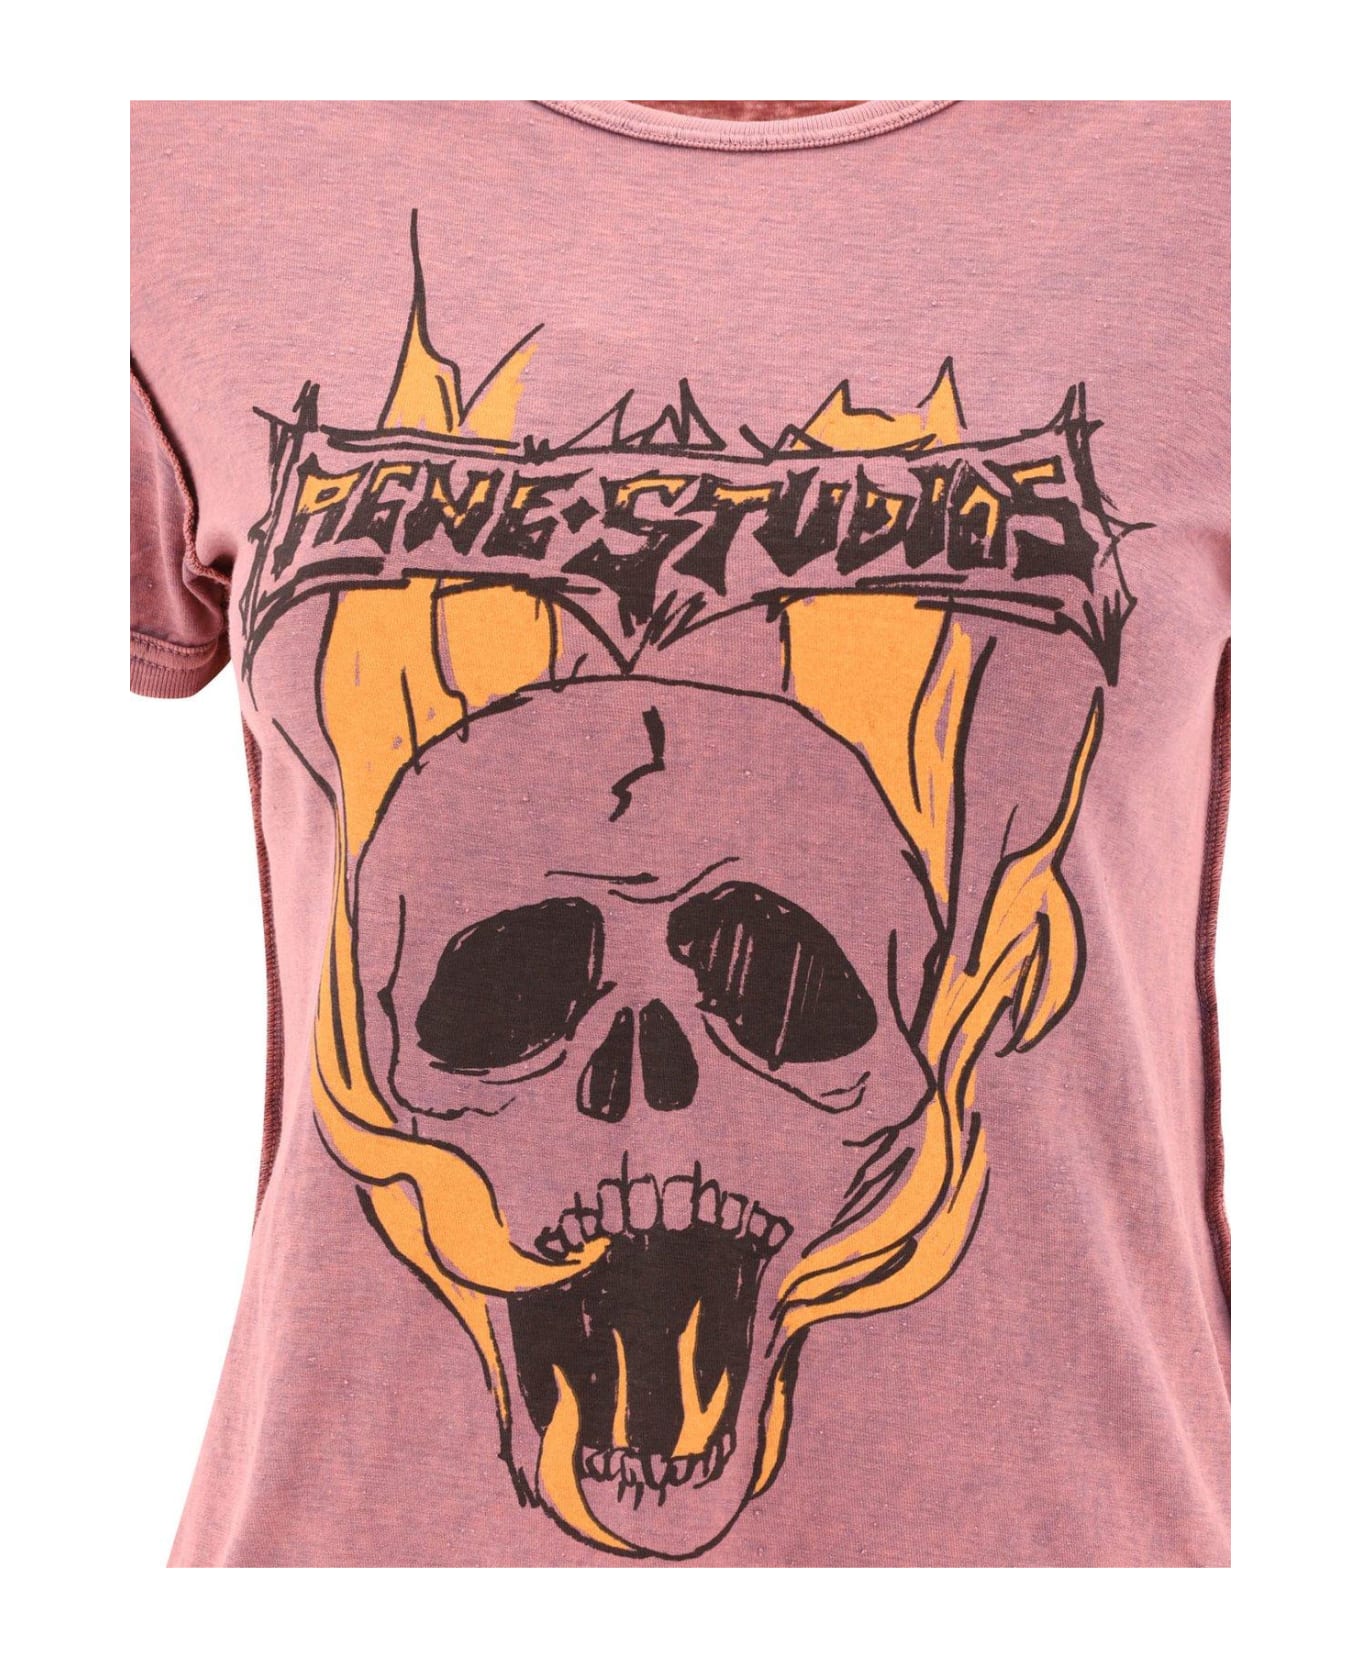 Acne Studios Graphic Printed Crewneck T-shirt - Ctl Mauve Pink